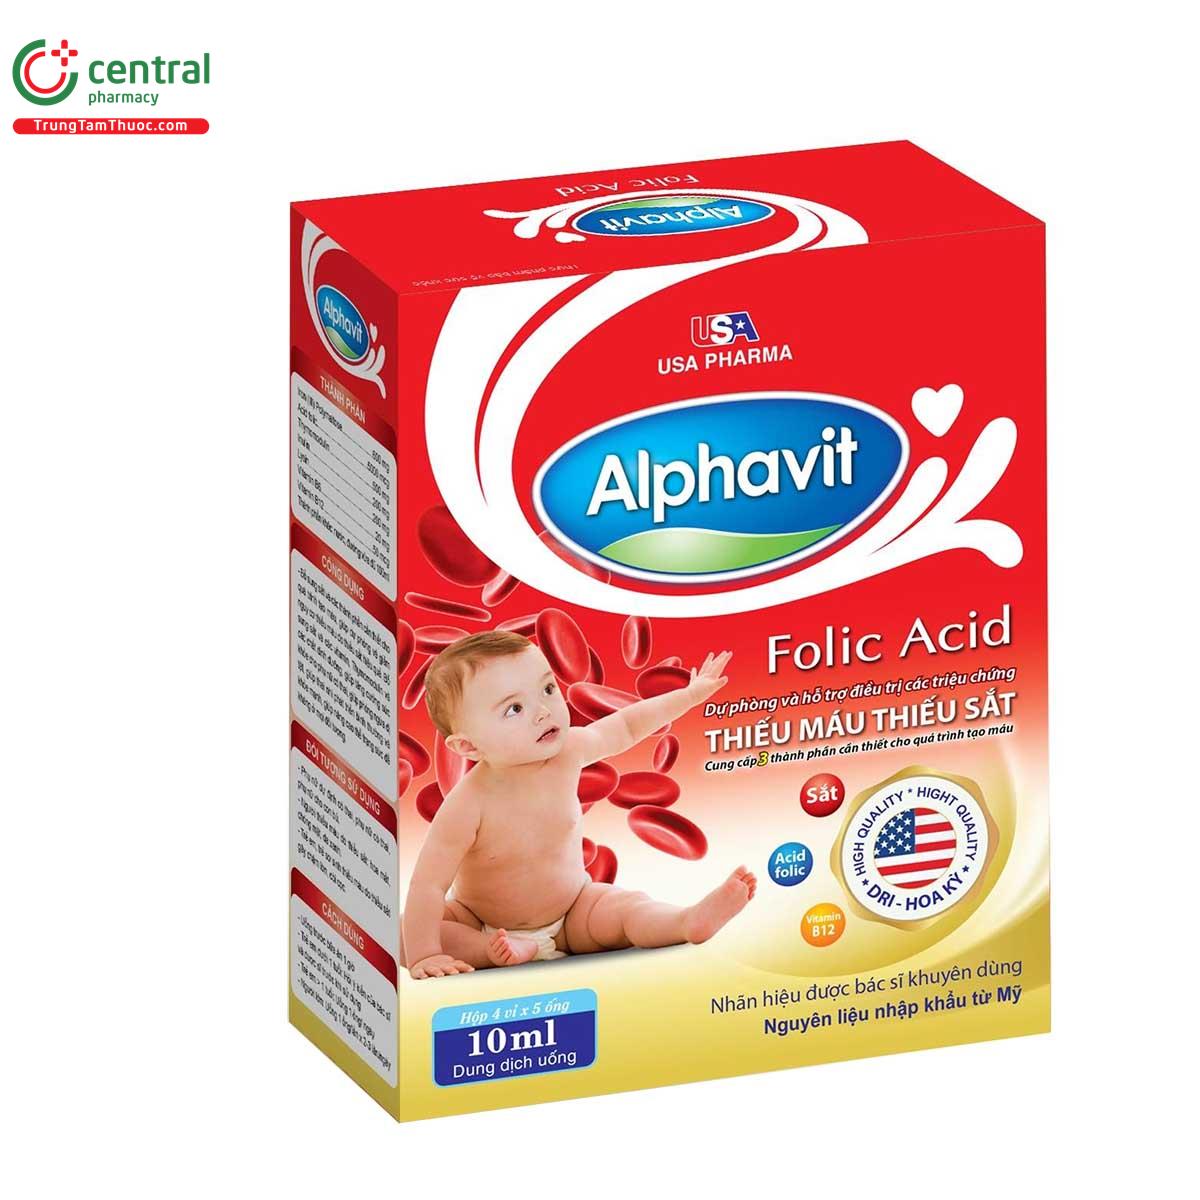 alphavit folic acid 2 L4186